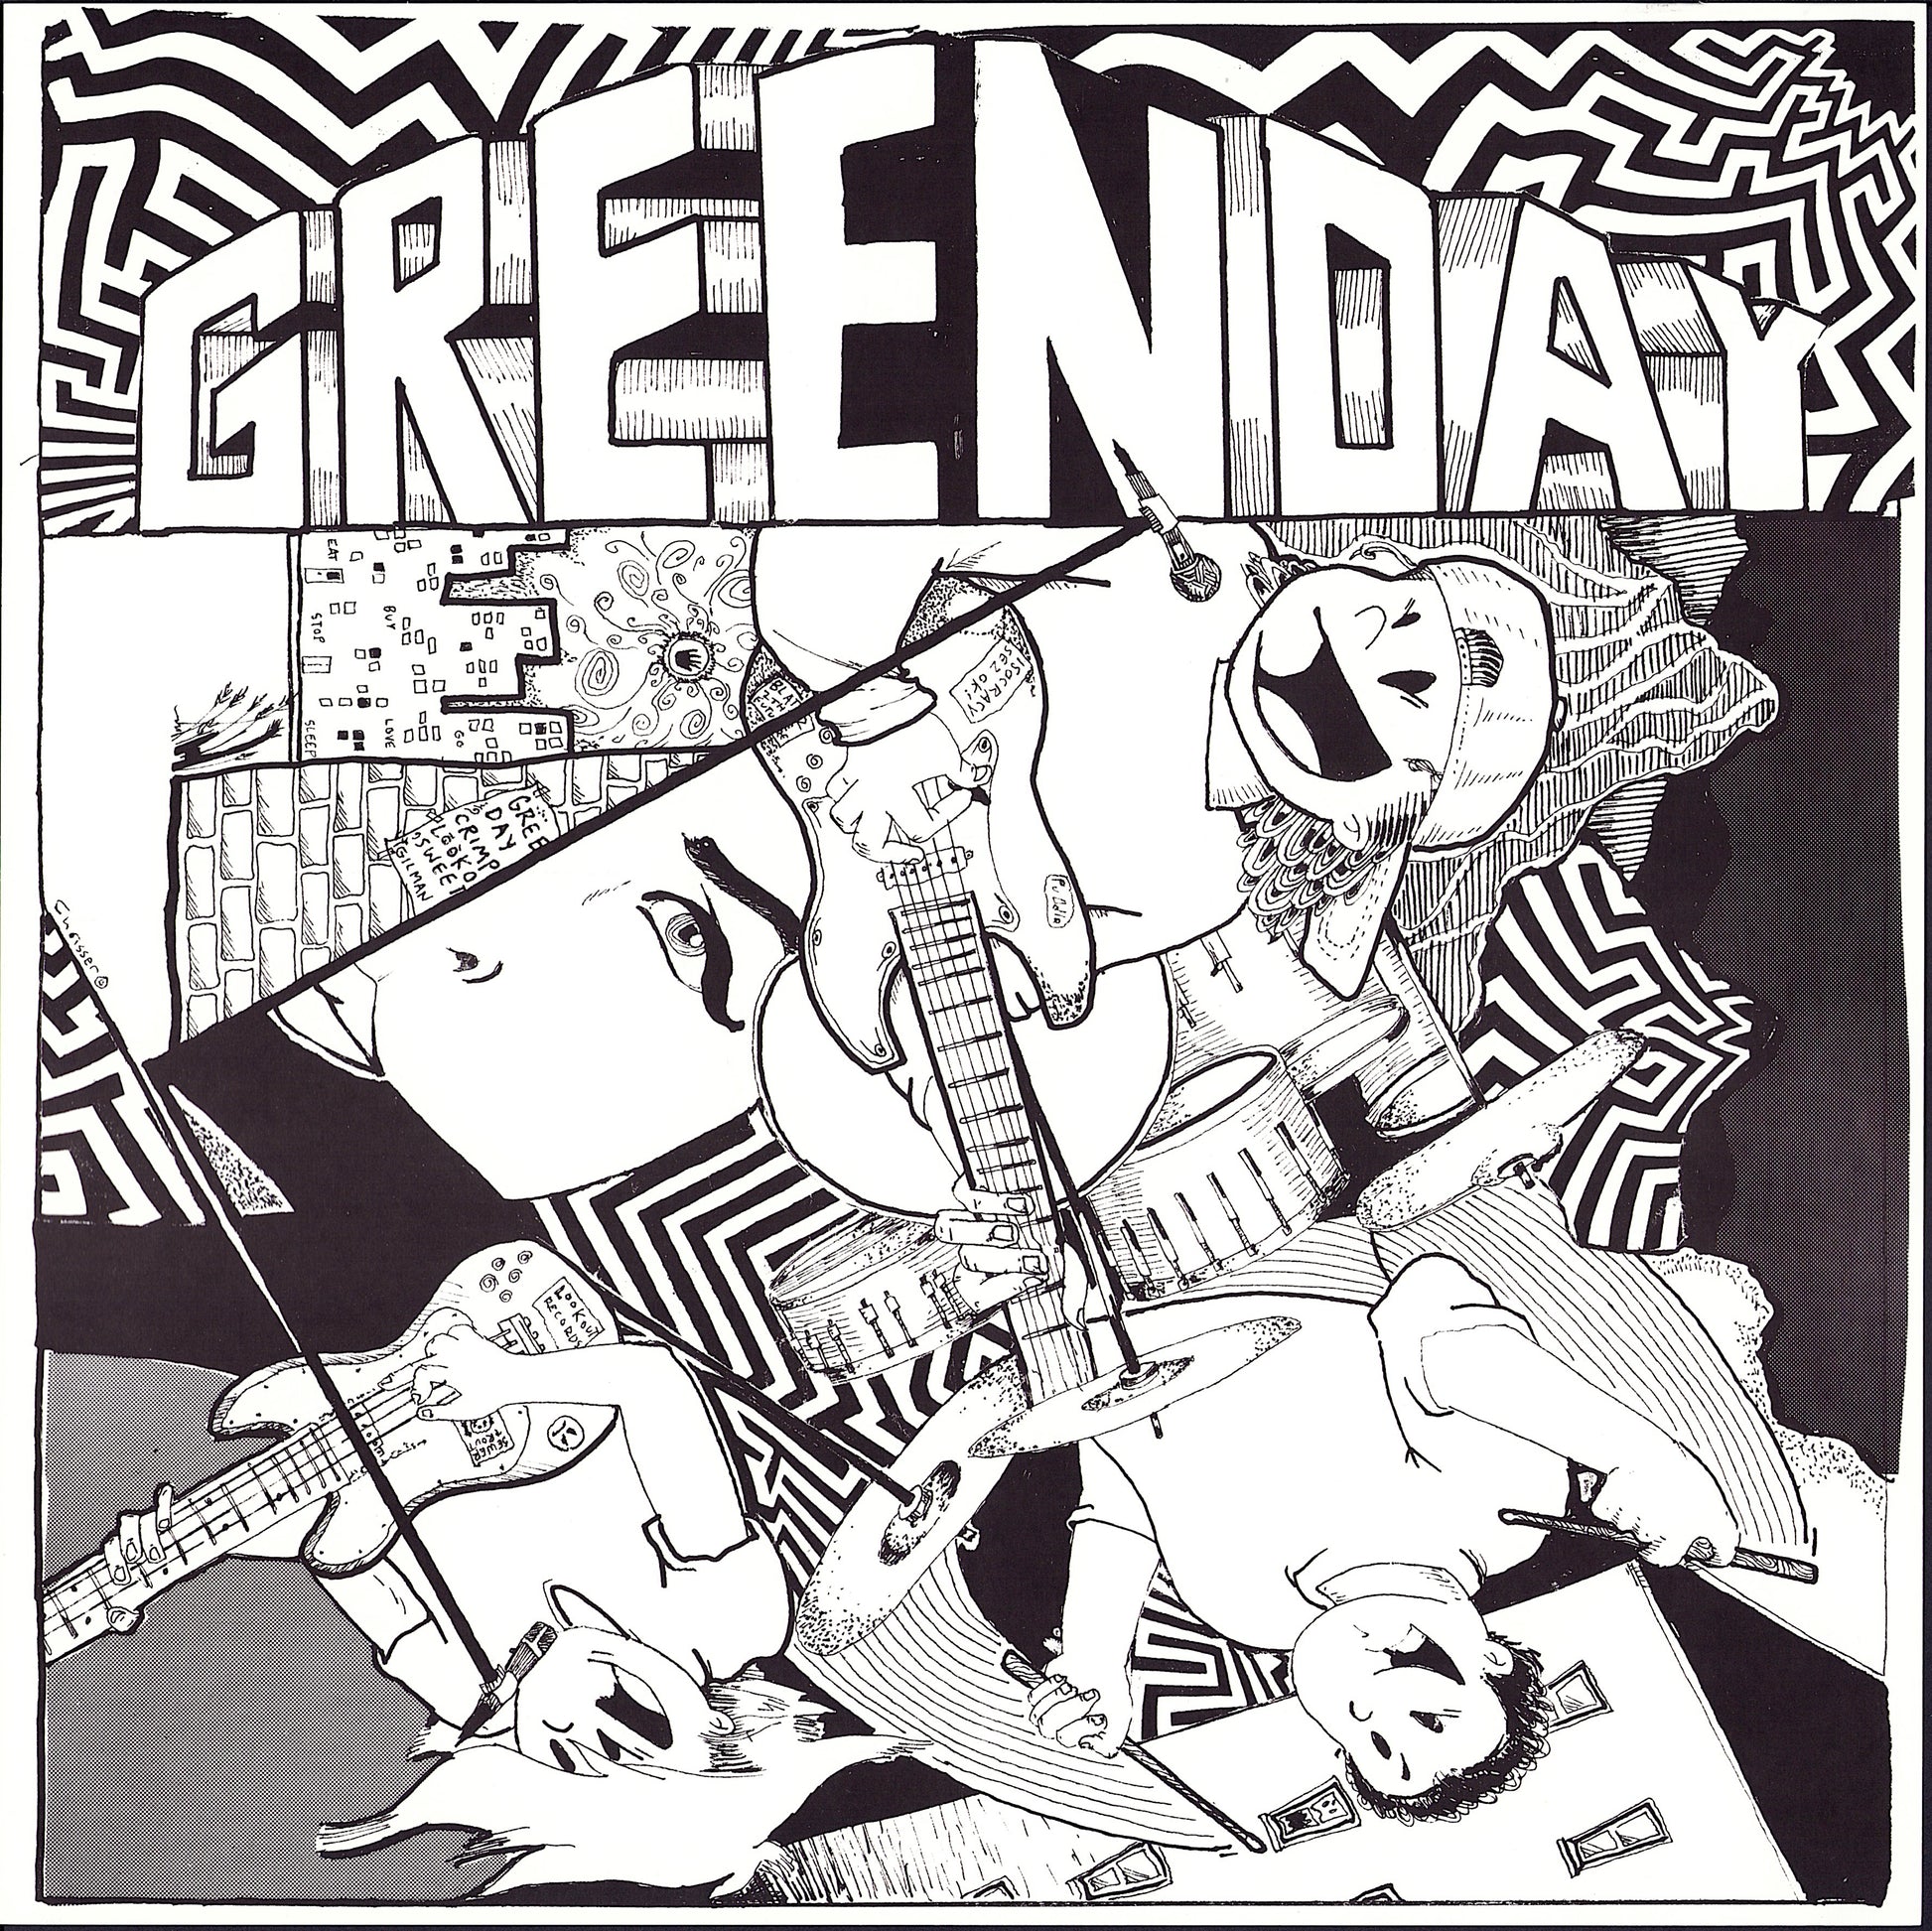 Green Day - 39/Smooth Vinyl LP